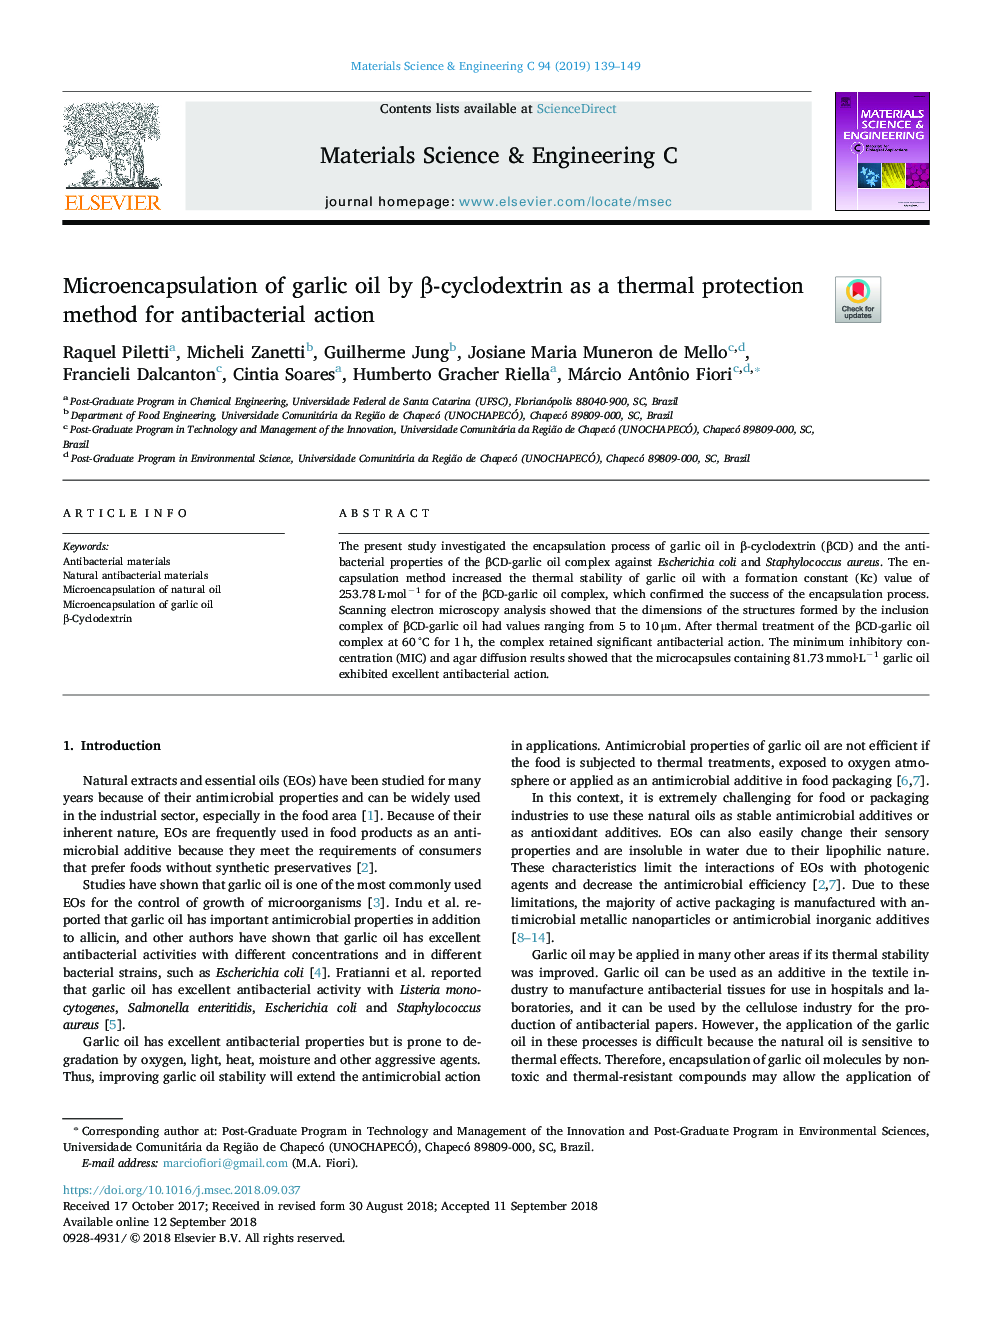 Microencapsulation of garlic oil by Î²âcyclodextrin as a thermal protection method for antibacterial action